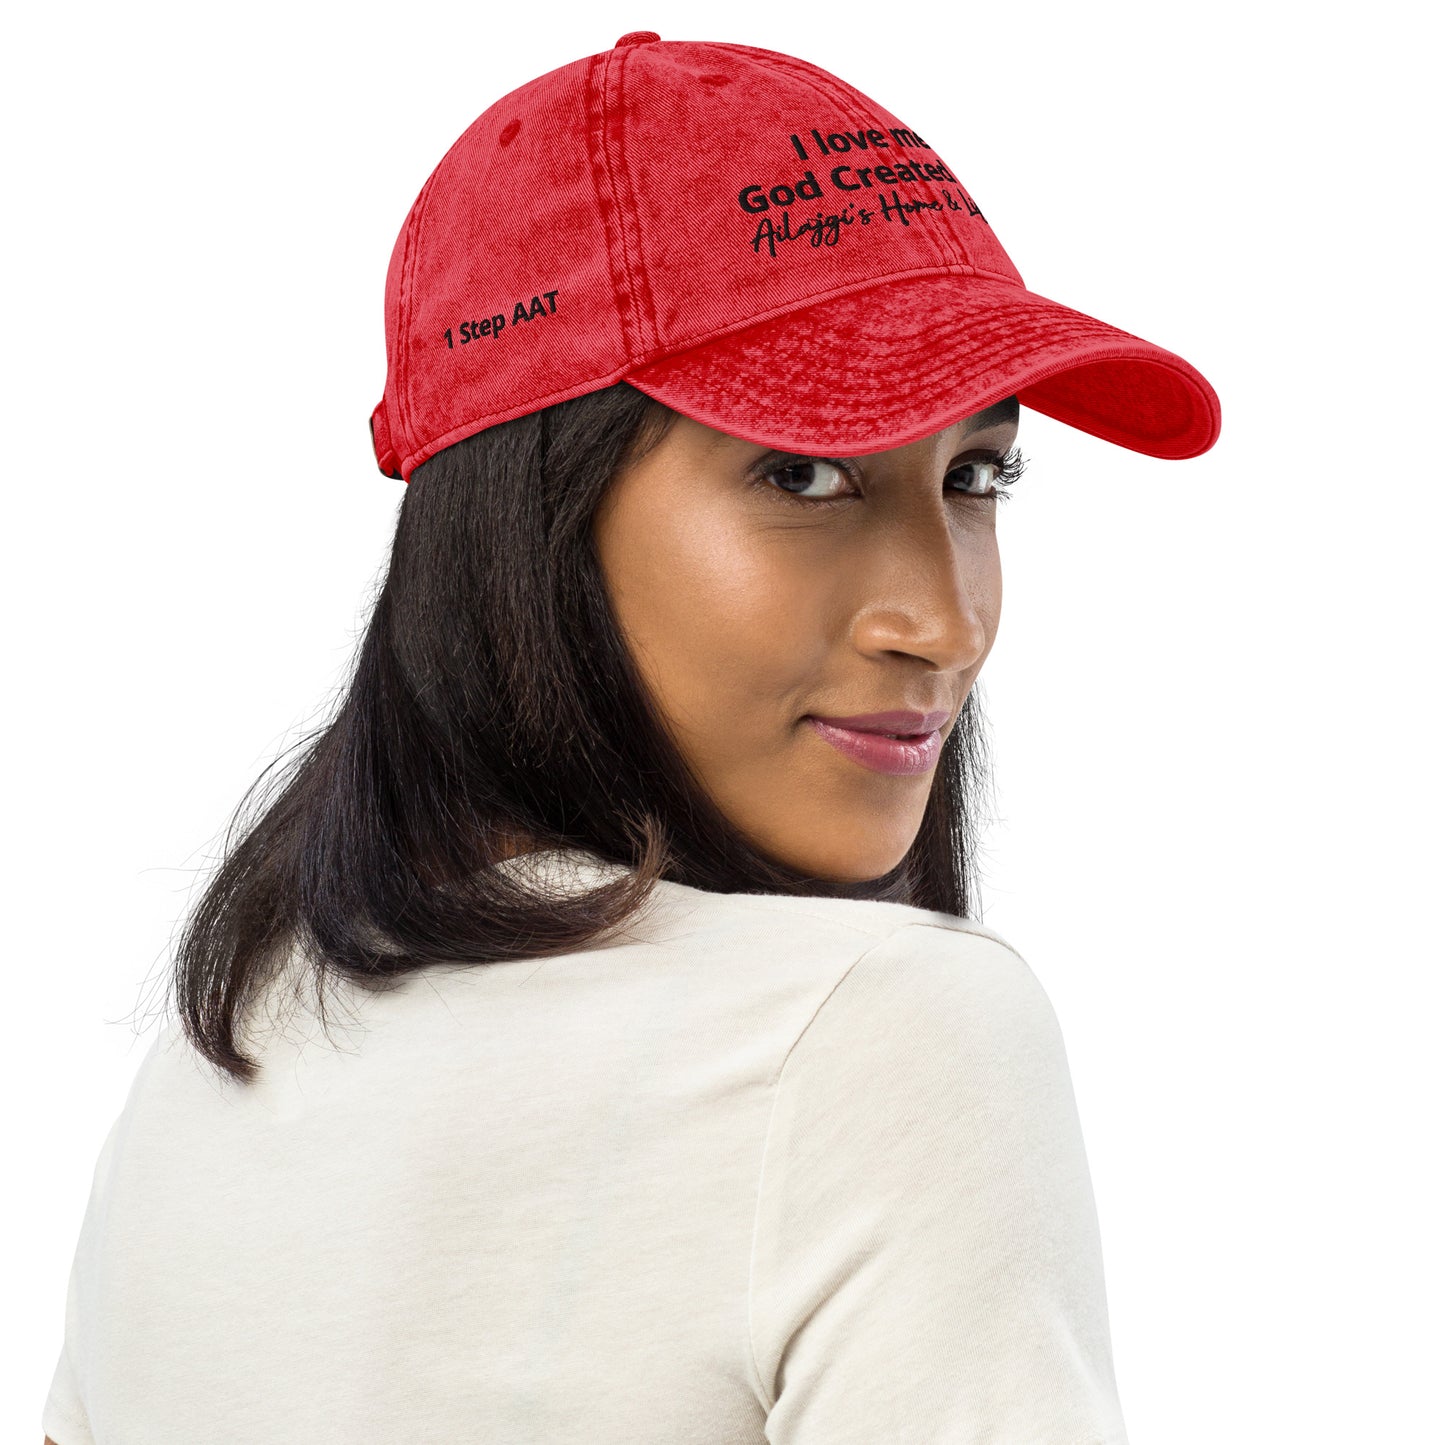 I love me (Self love cap)VINTAGE CAP